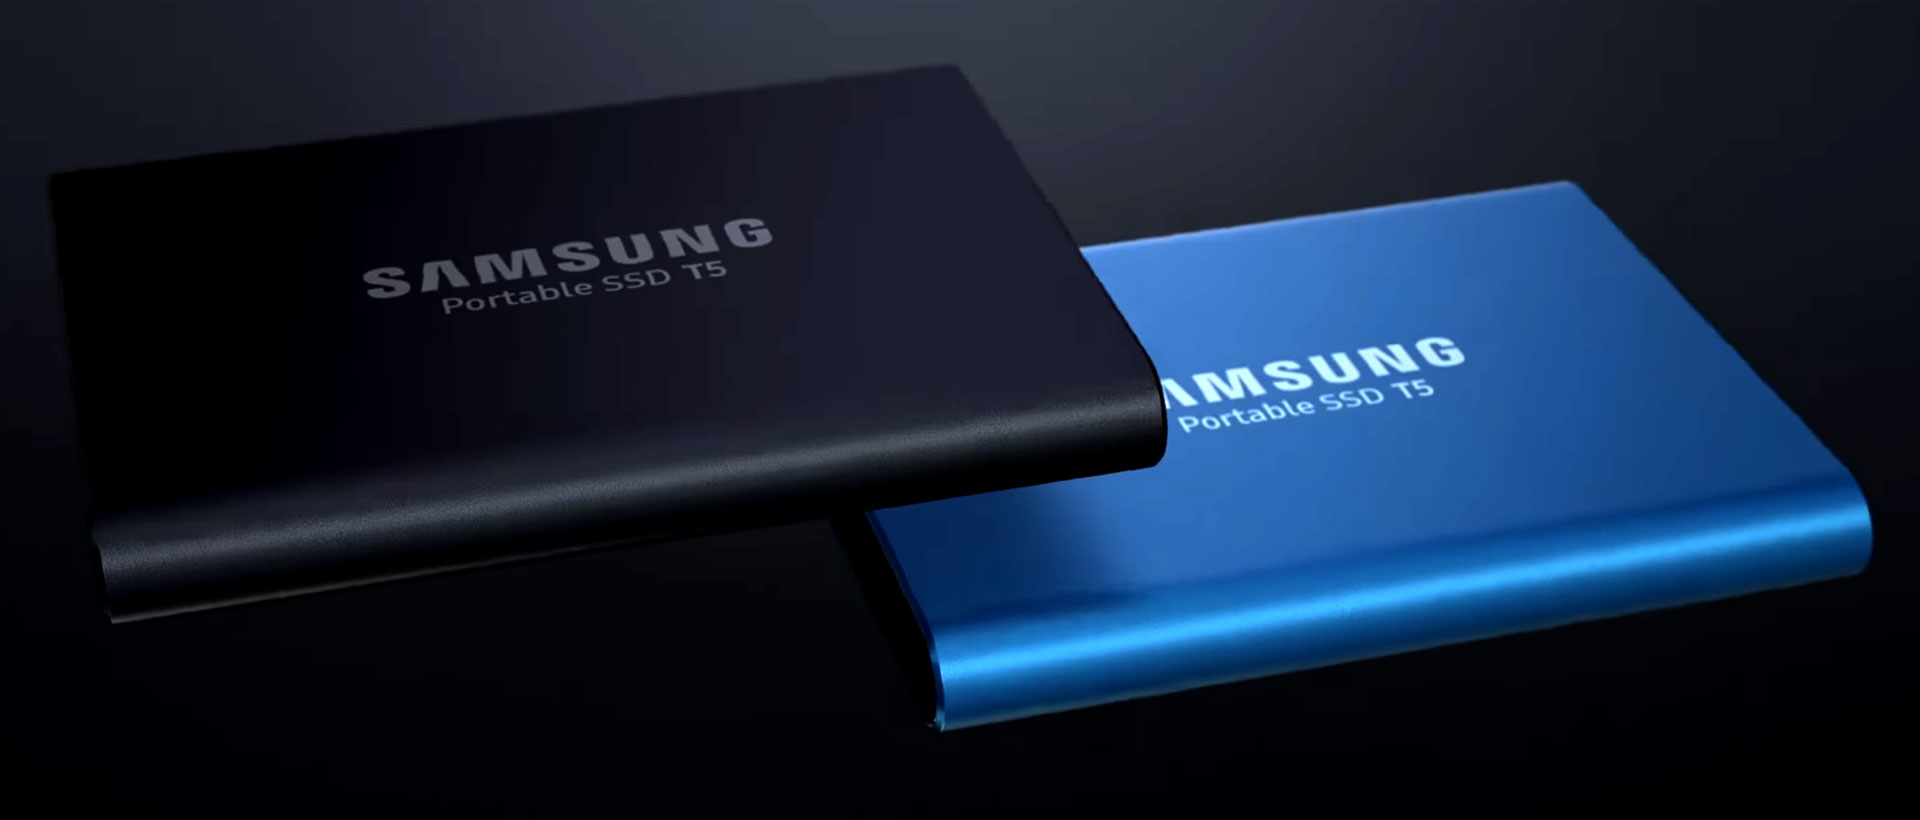 Samsung T5 1TB and 2 TB models